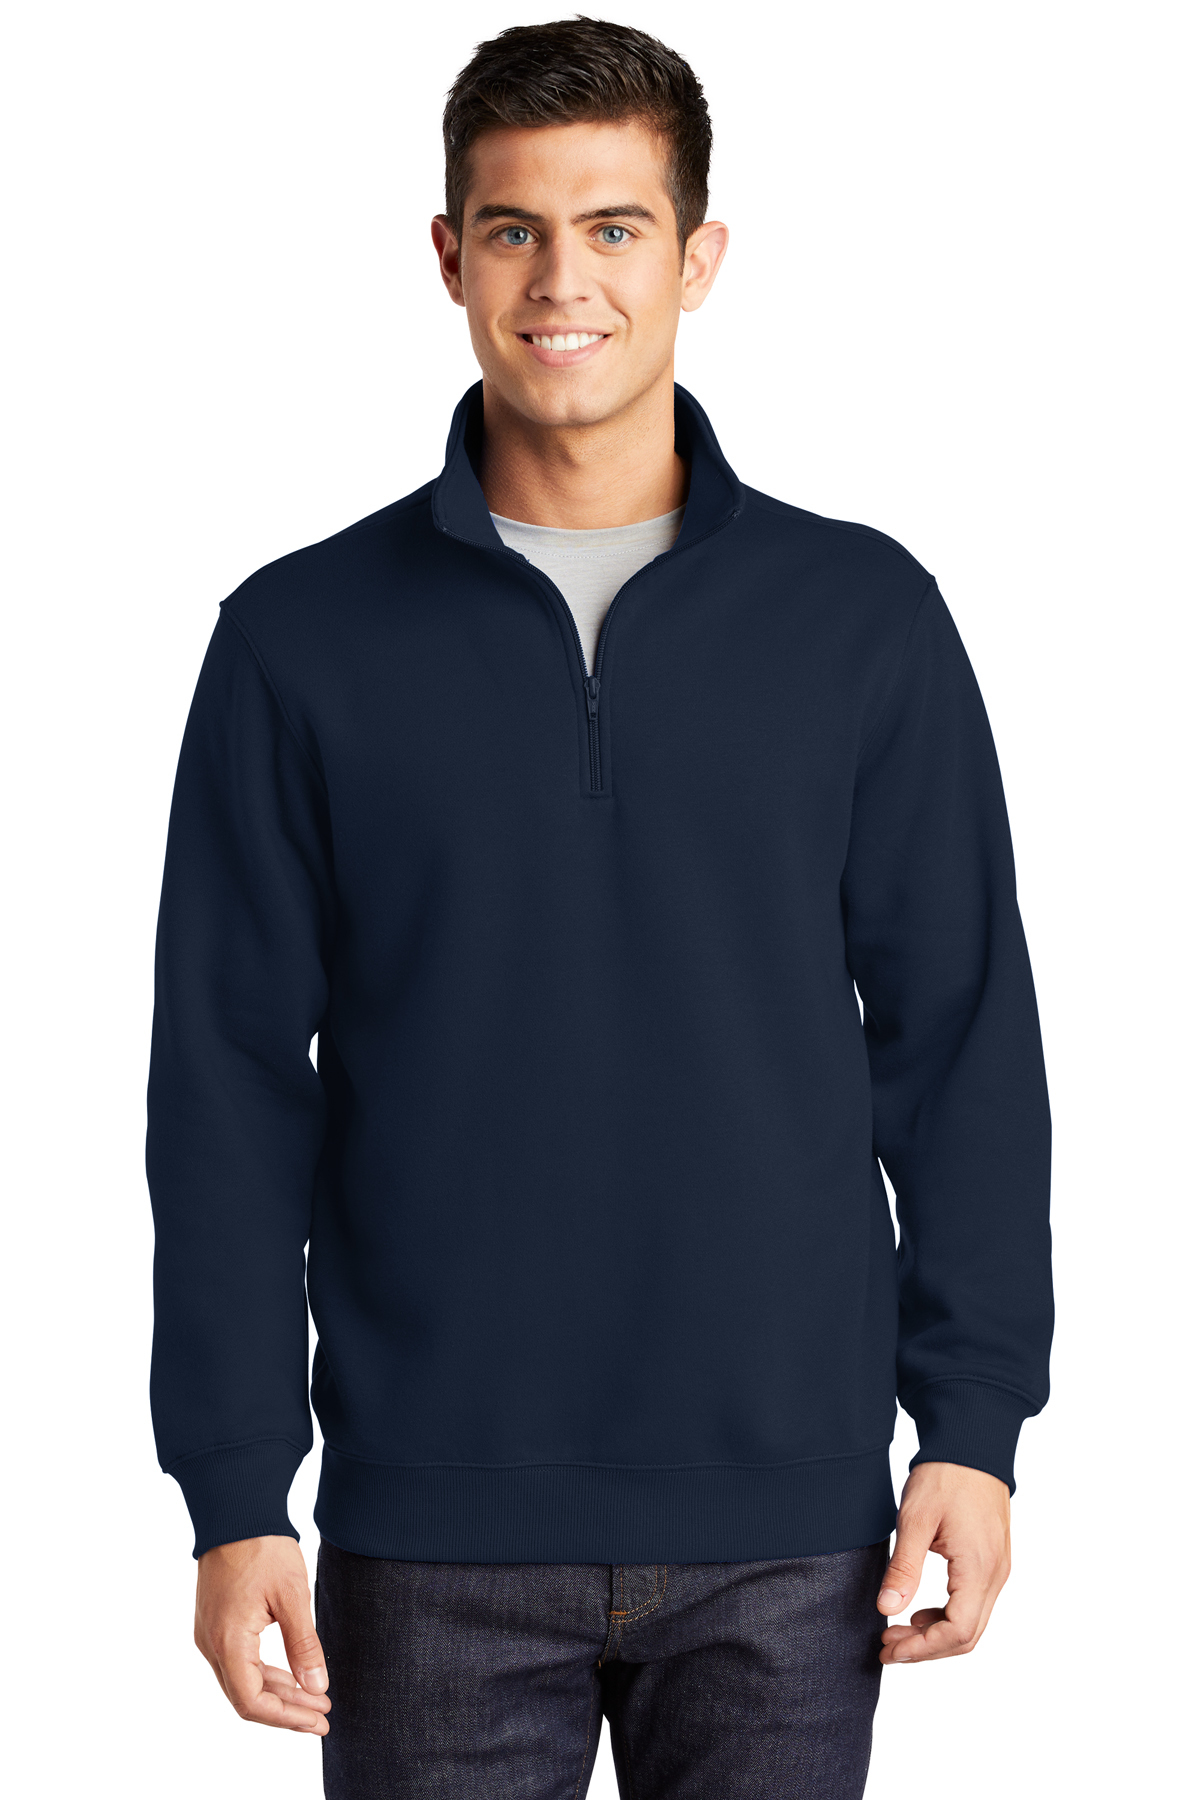 NWT Boys Tek Gear 1/4 Zip Soft Fleece Pullover Top assorted sizes & prints 